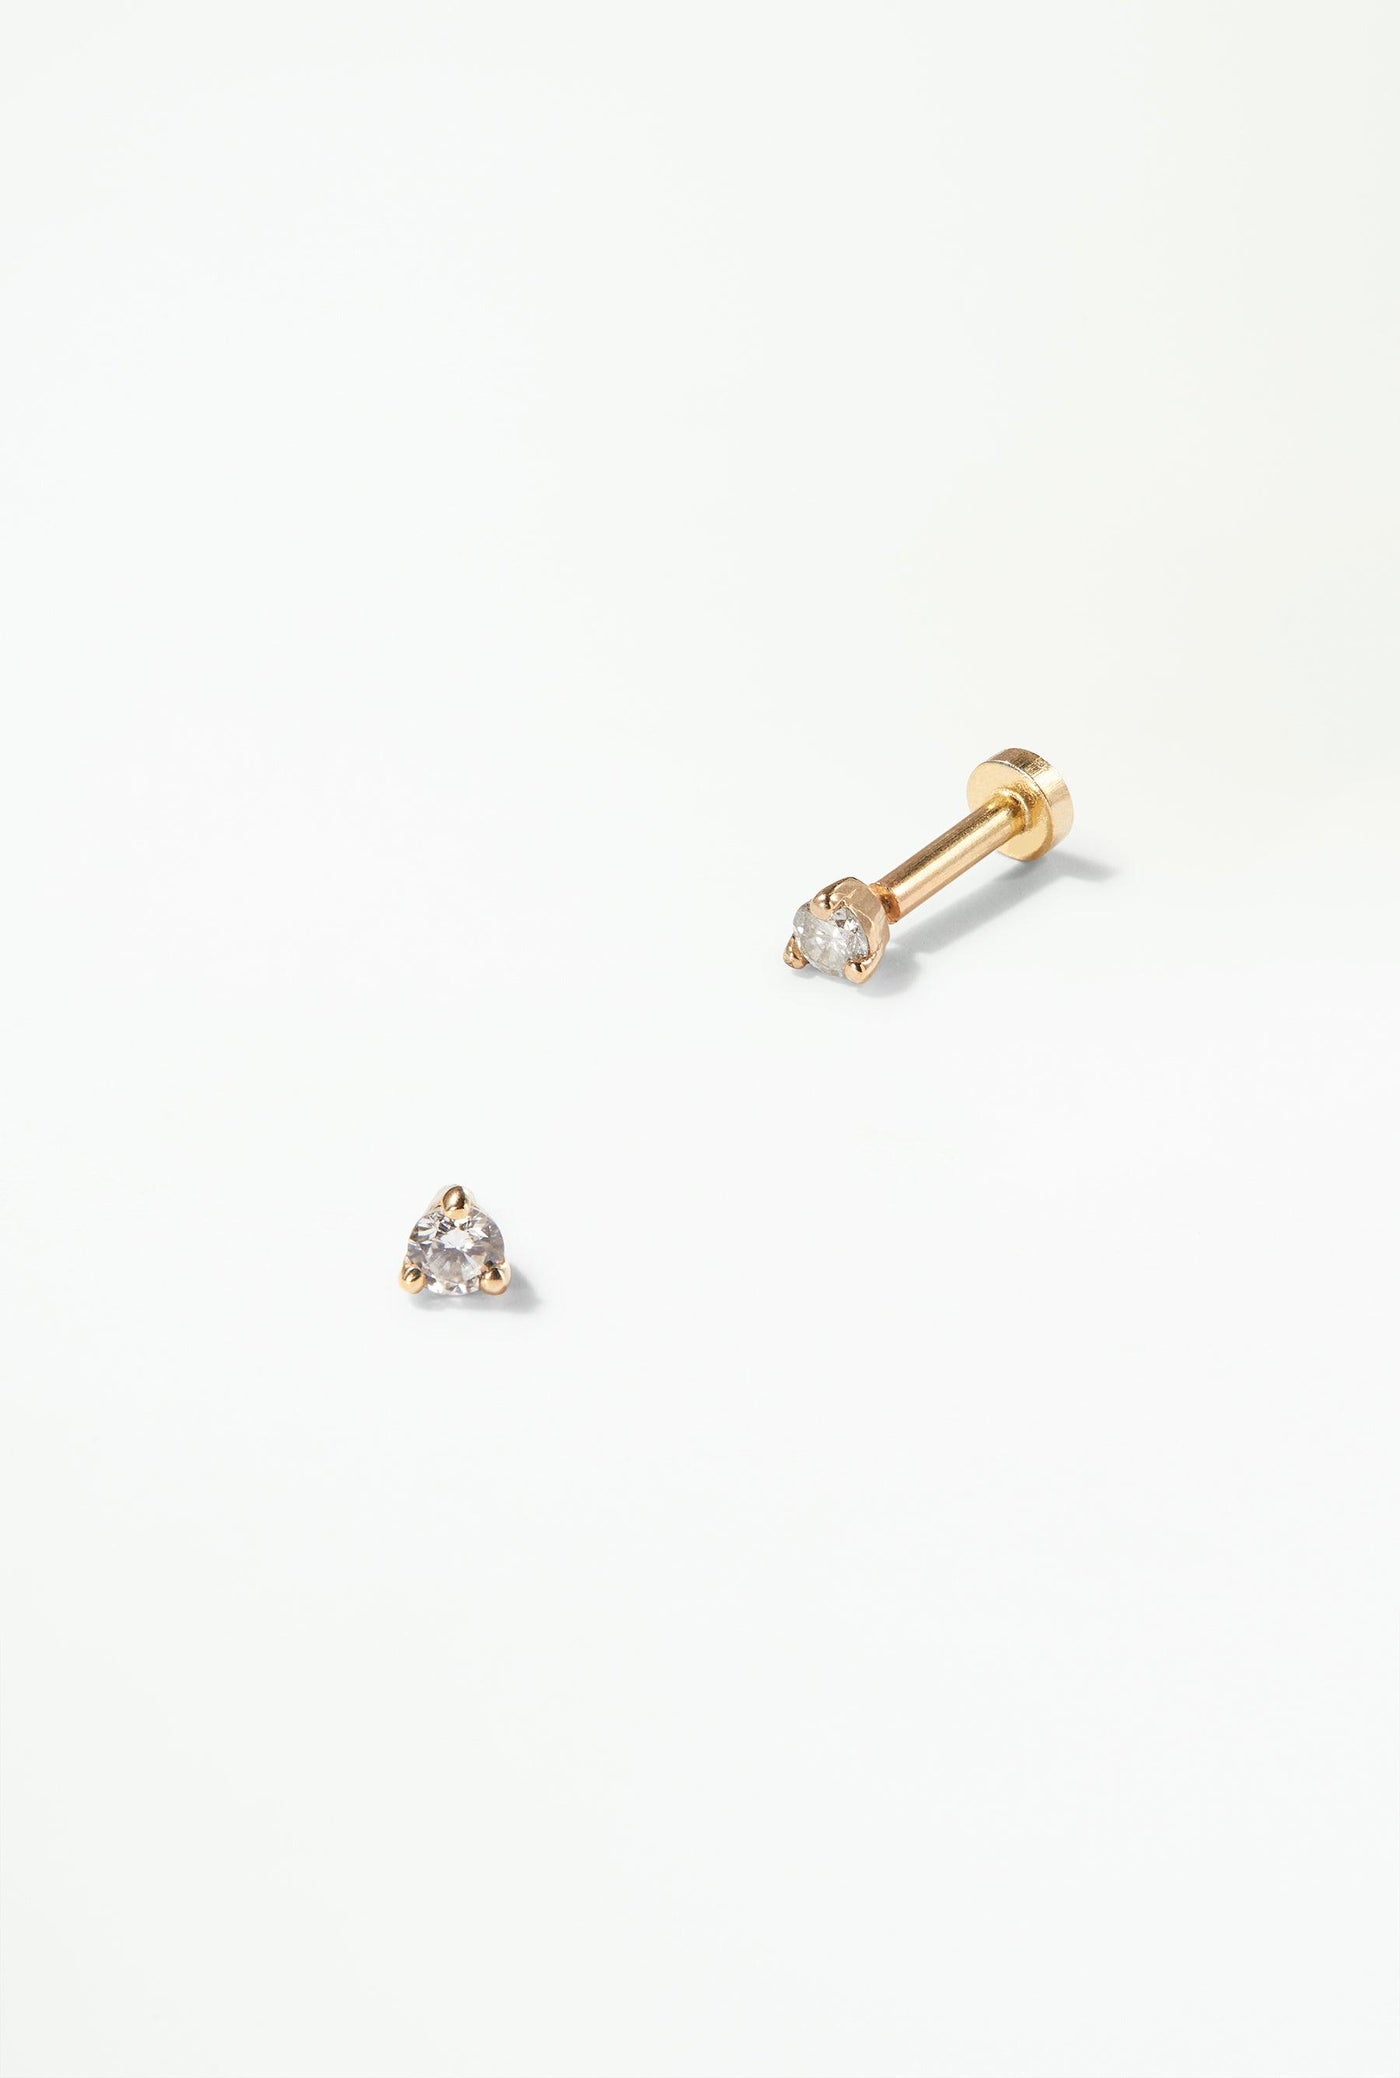 LINK CHAIN SMALL DIAMOND EARRINGS - Anmol Jewellers